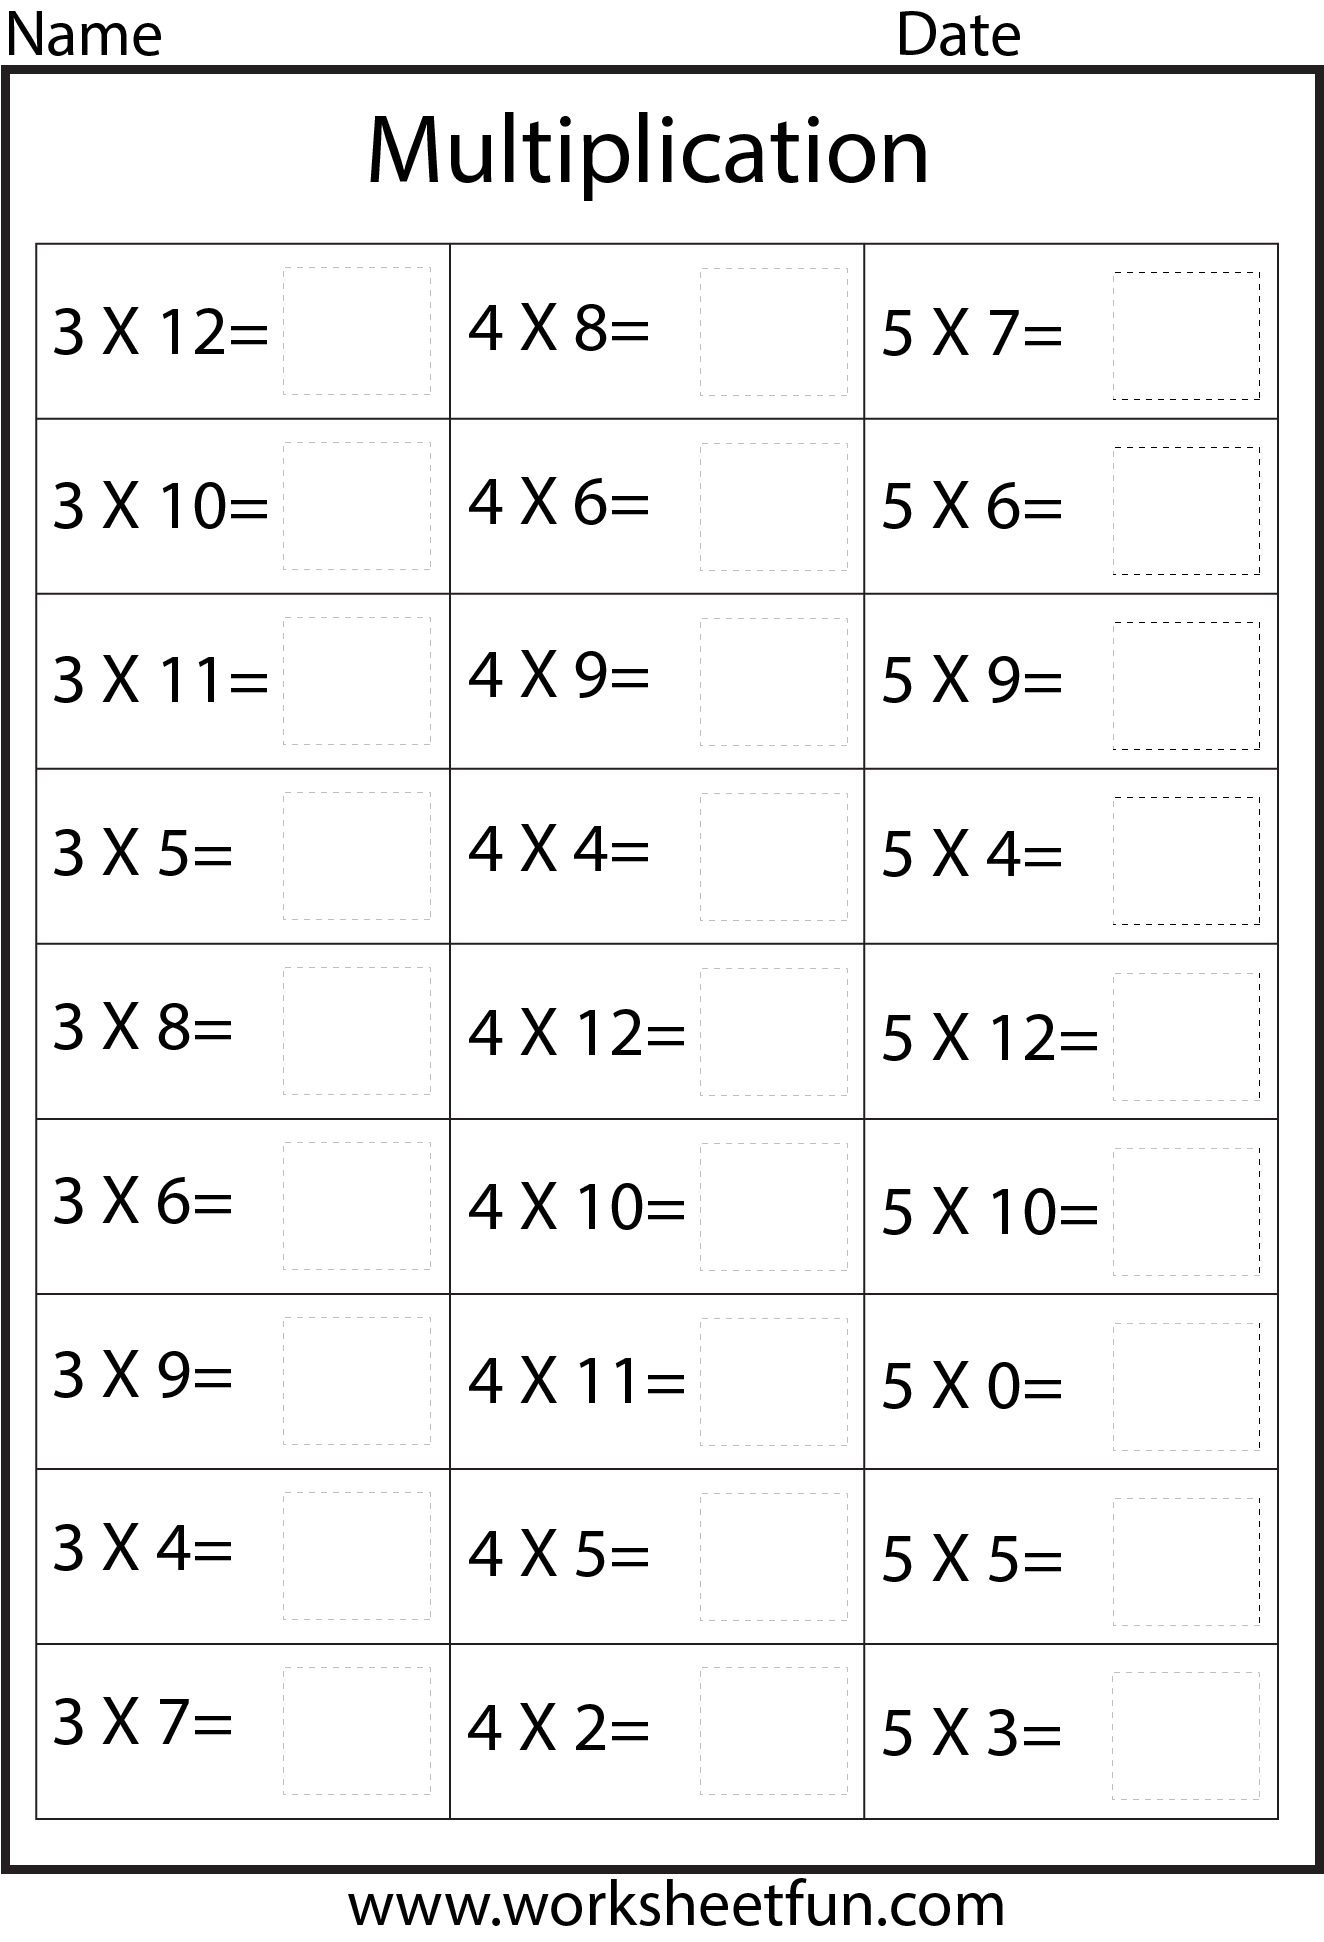  Multiplication Mixed Times Tables Ten Worksheets FREE Printable Worksheets Worksheetfun